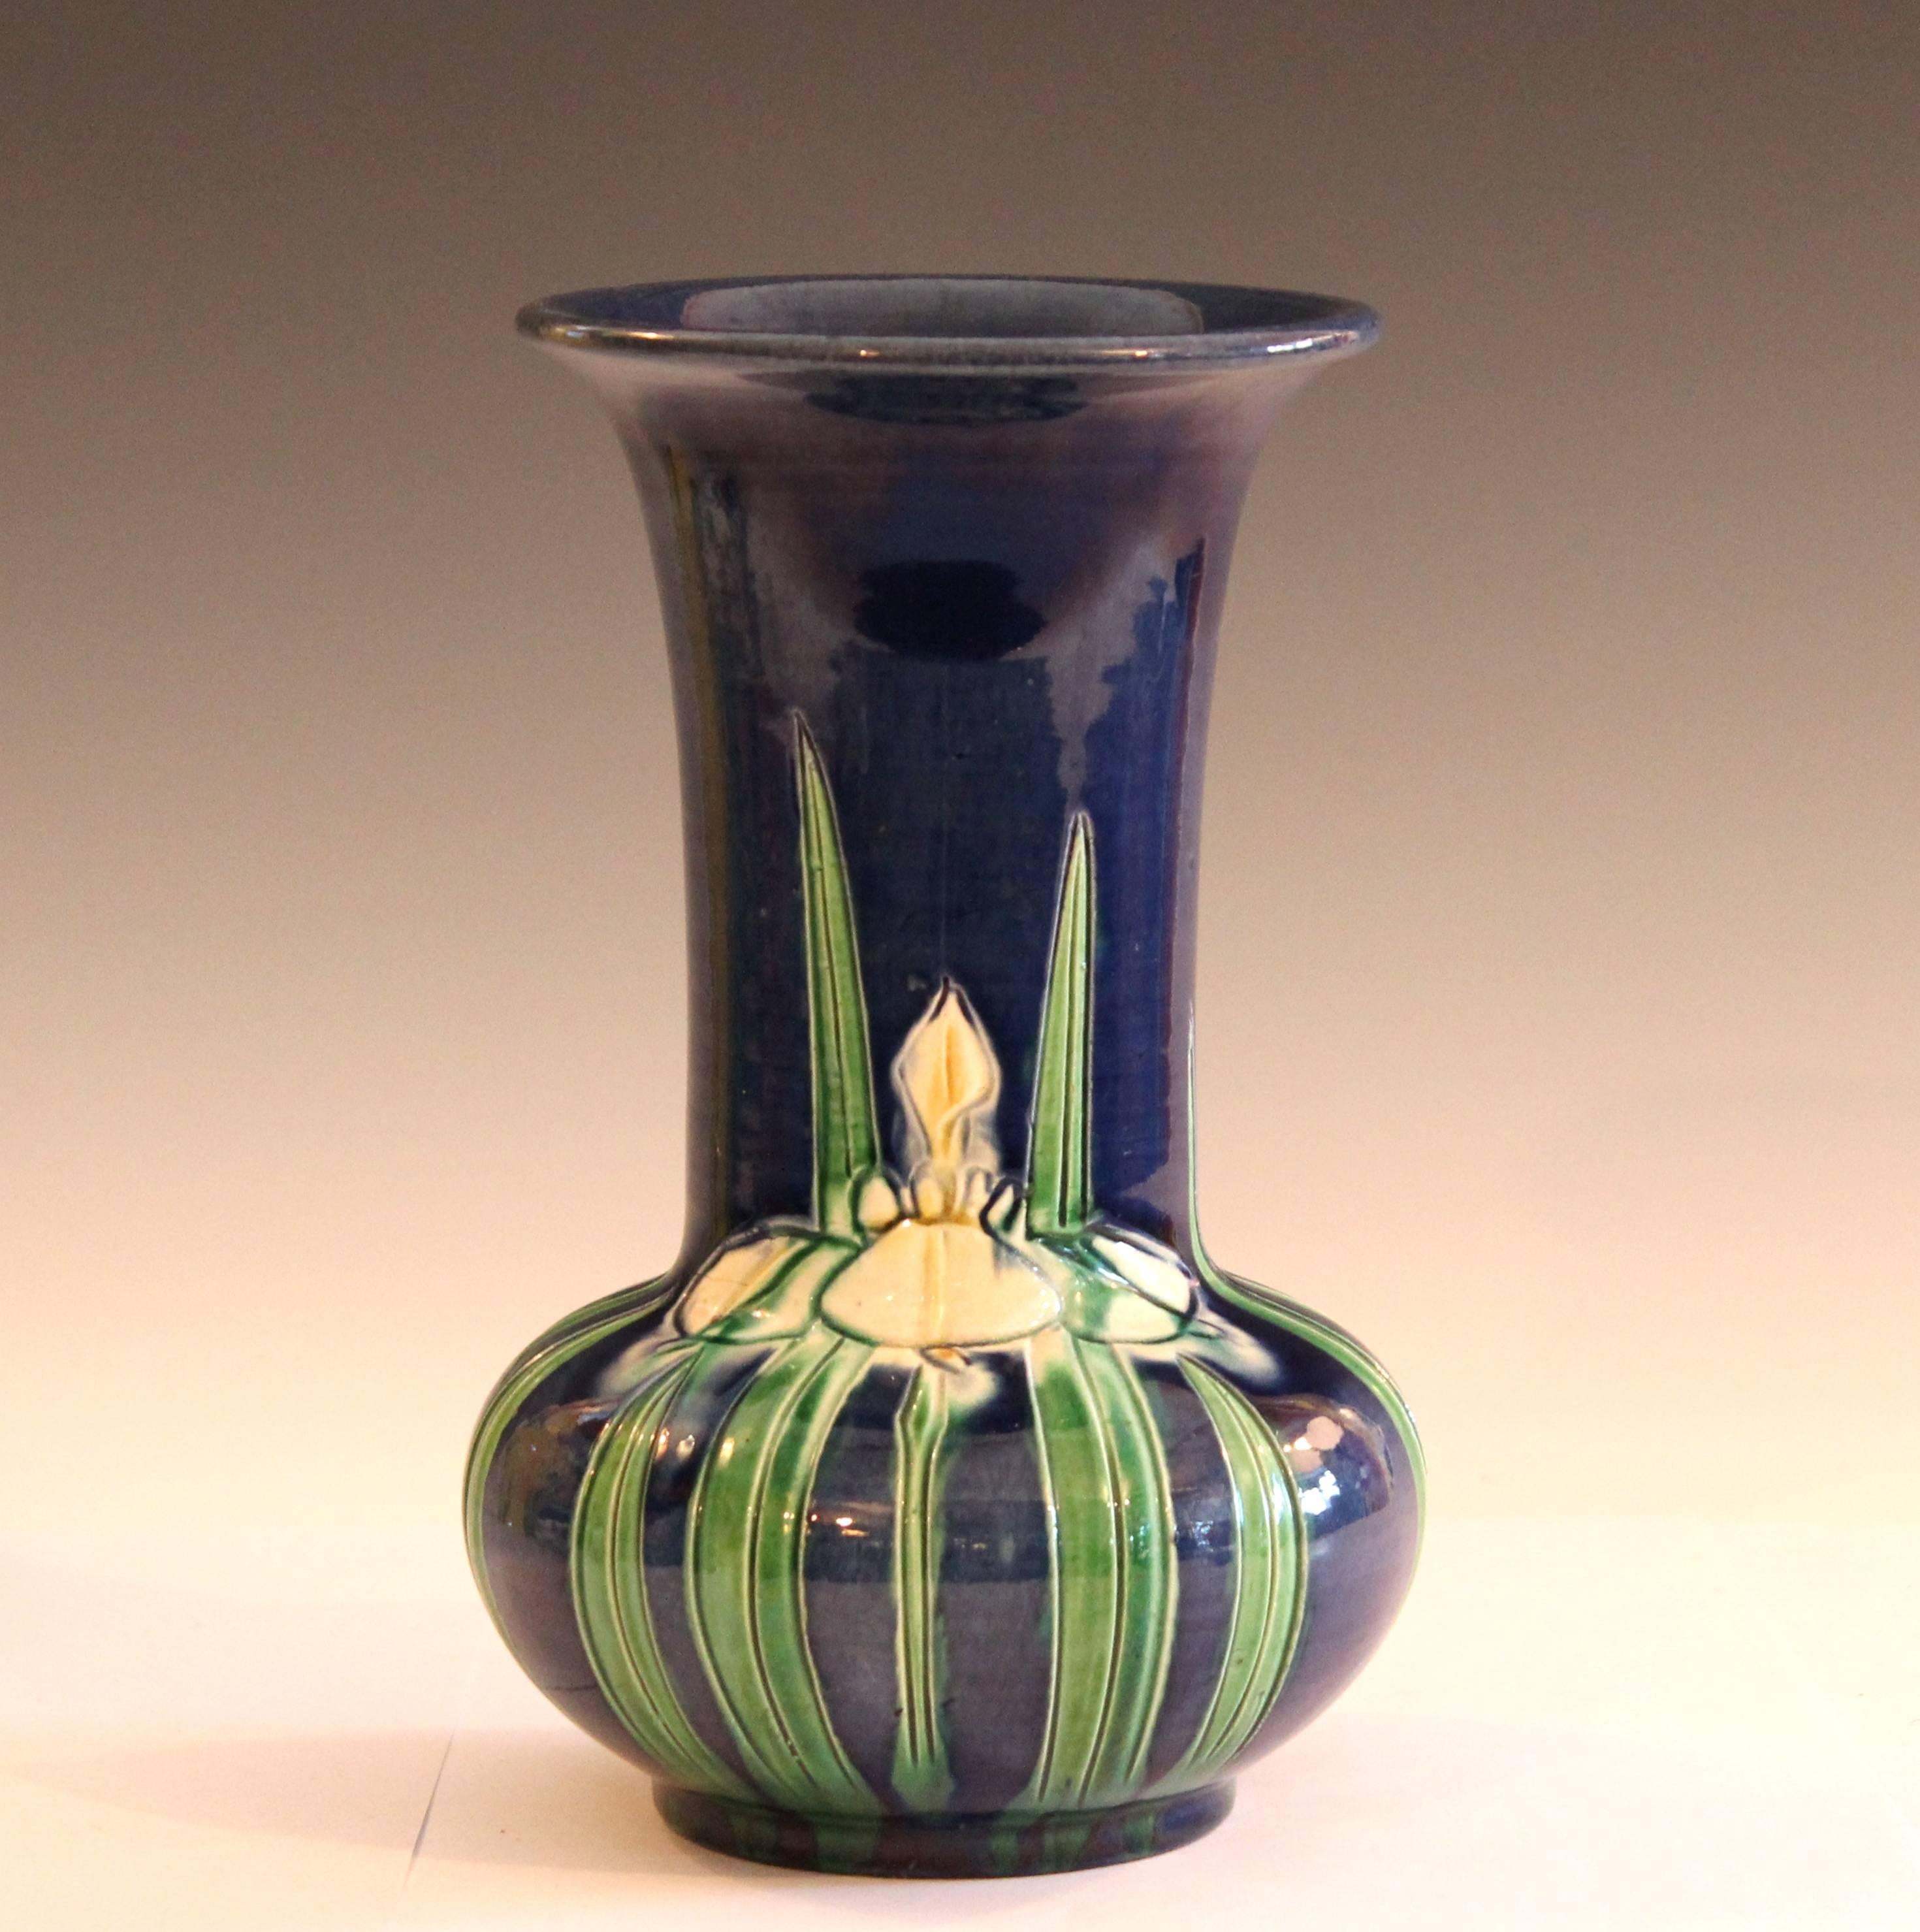 Awaji pottery trumpet form vase with incised iris design on unusual blue ground, circa 1920. Measure: 8 1/4